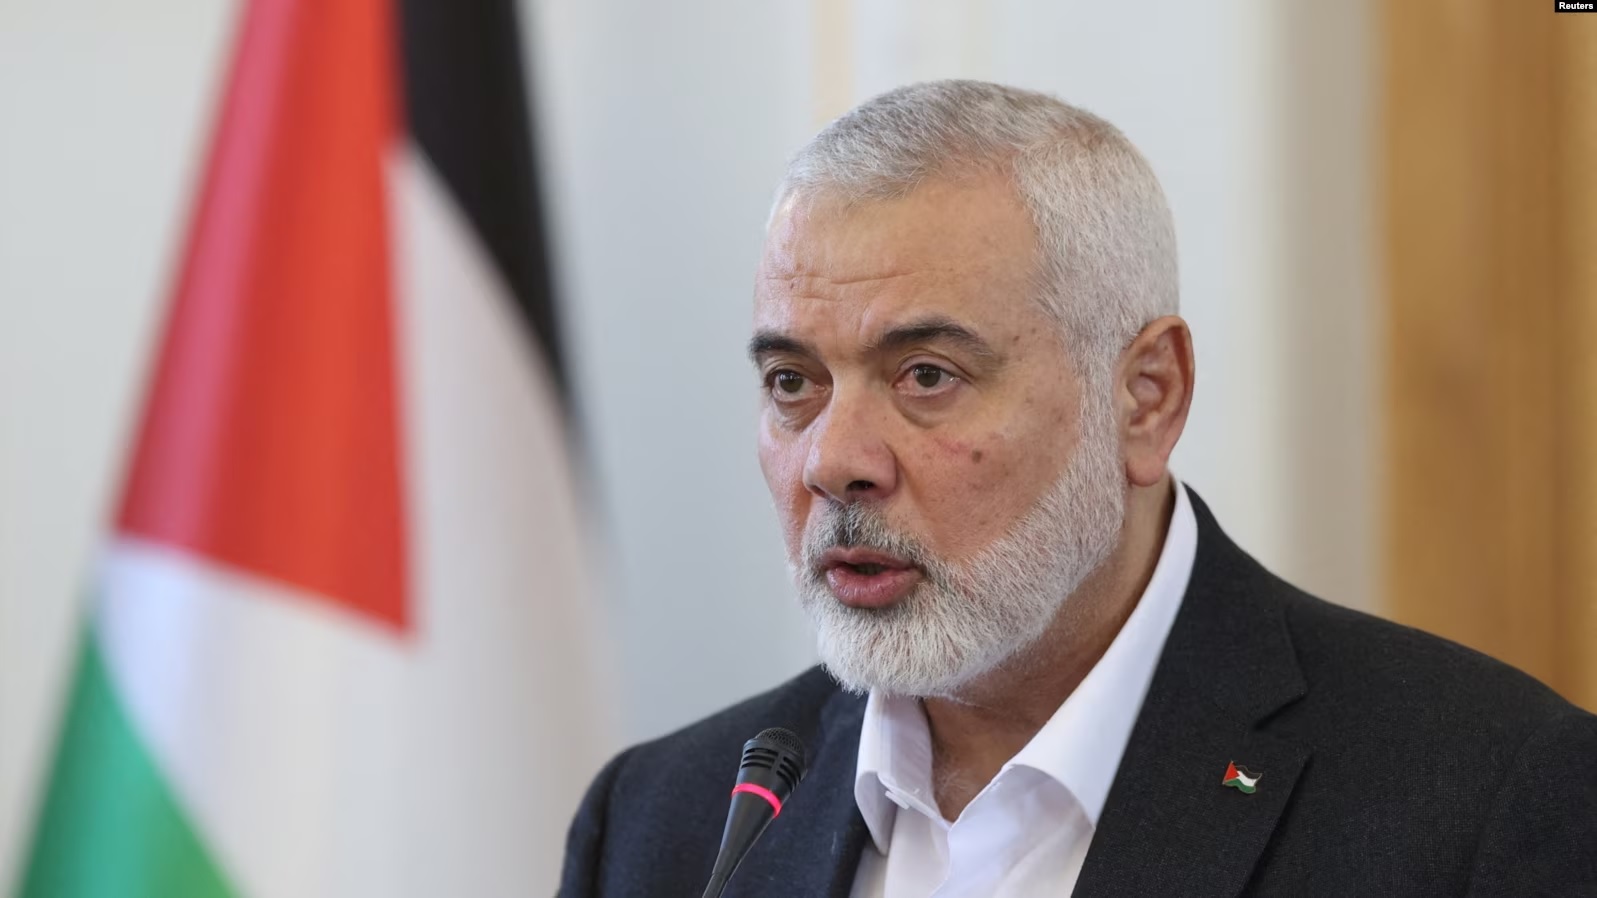 Udhëheqësi i grupit militant Hamas, Ismail Haniyeh